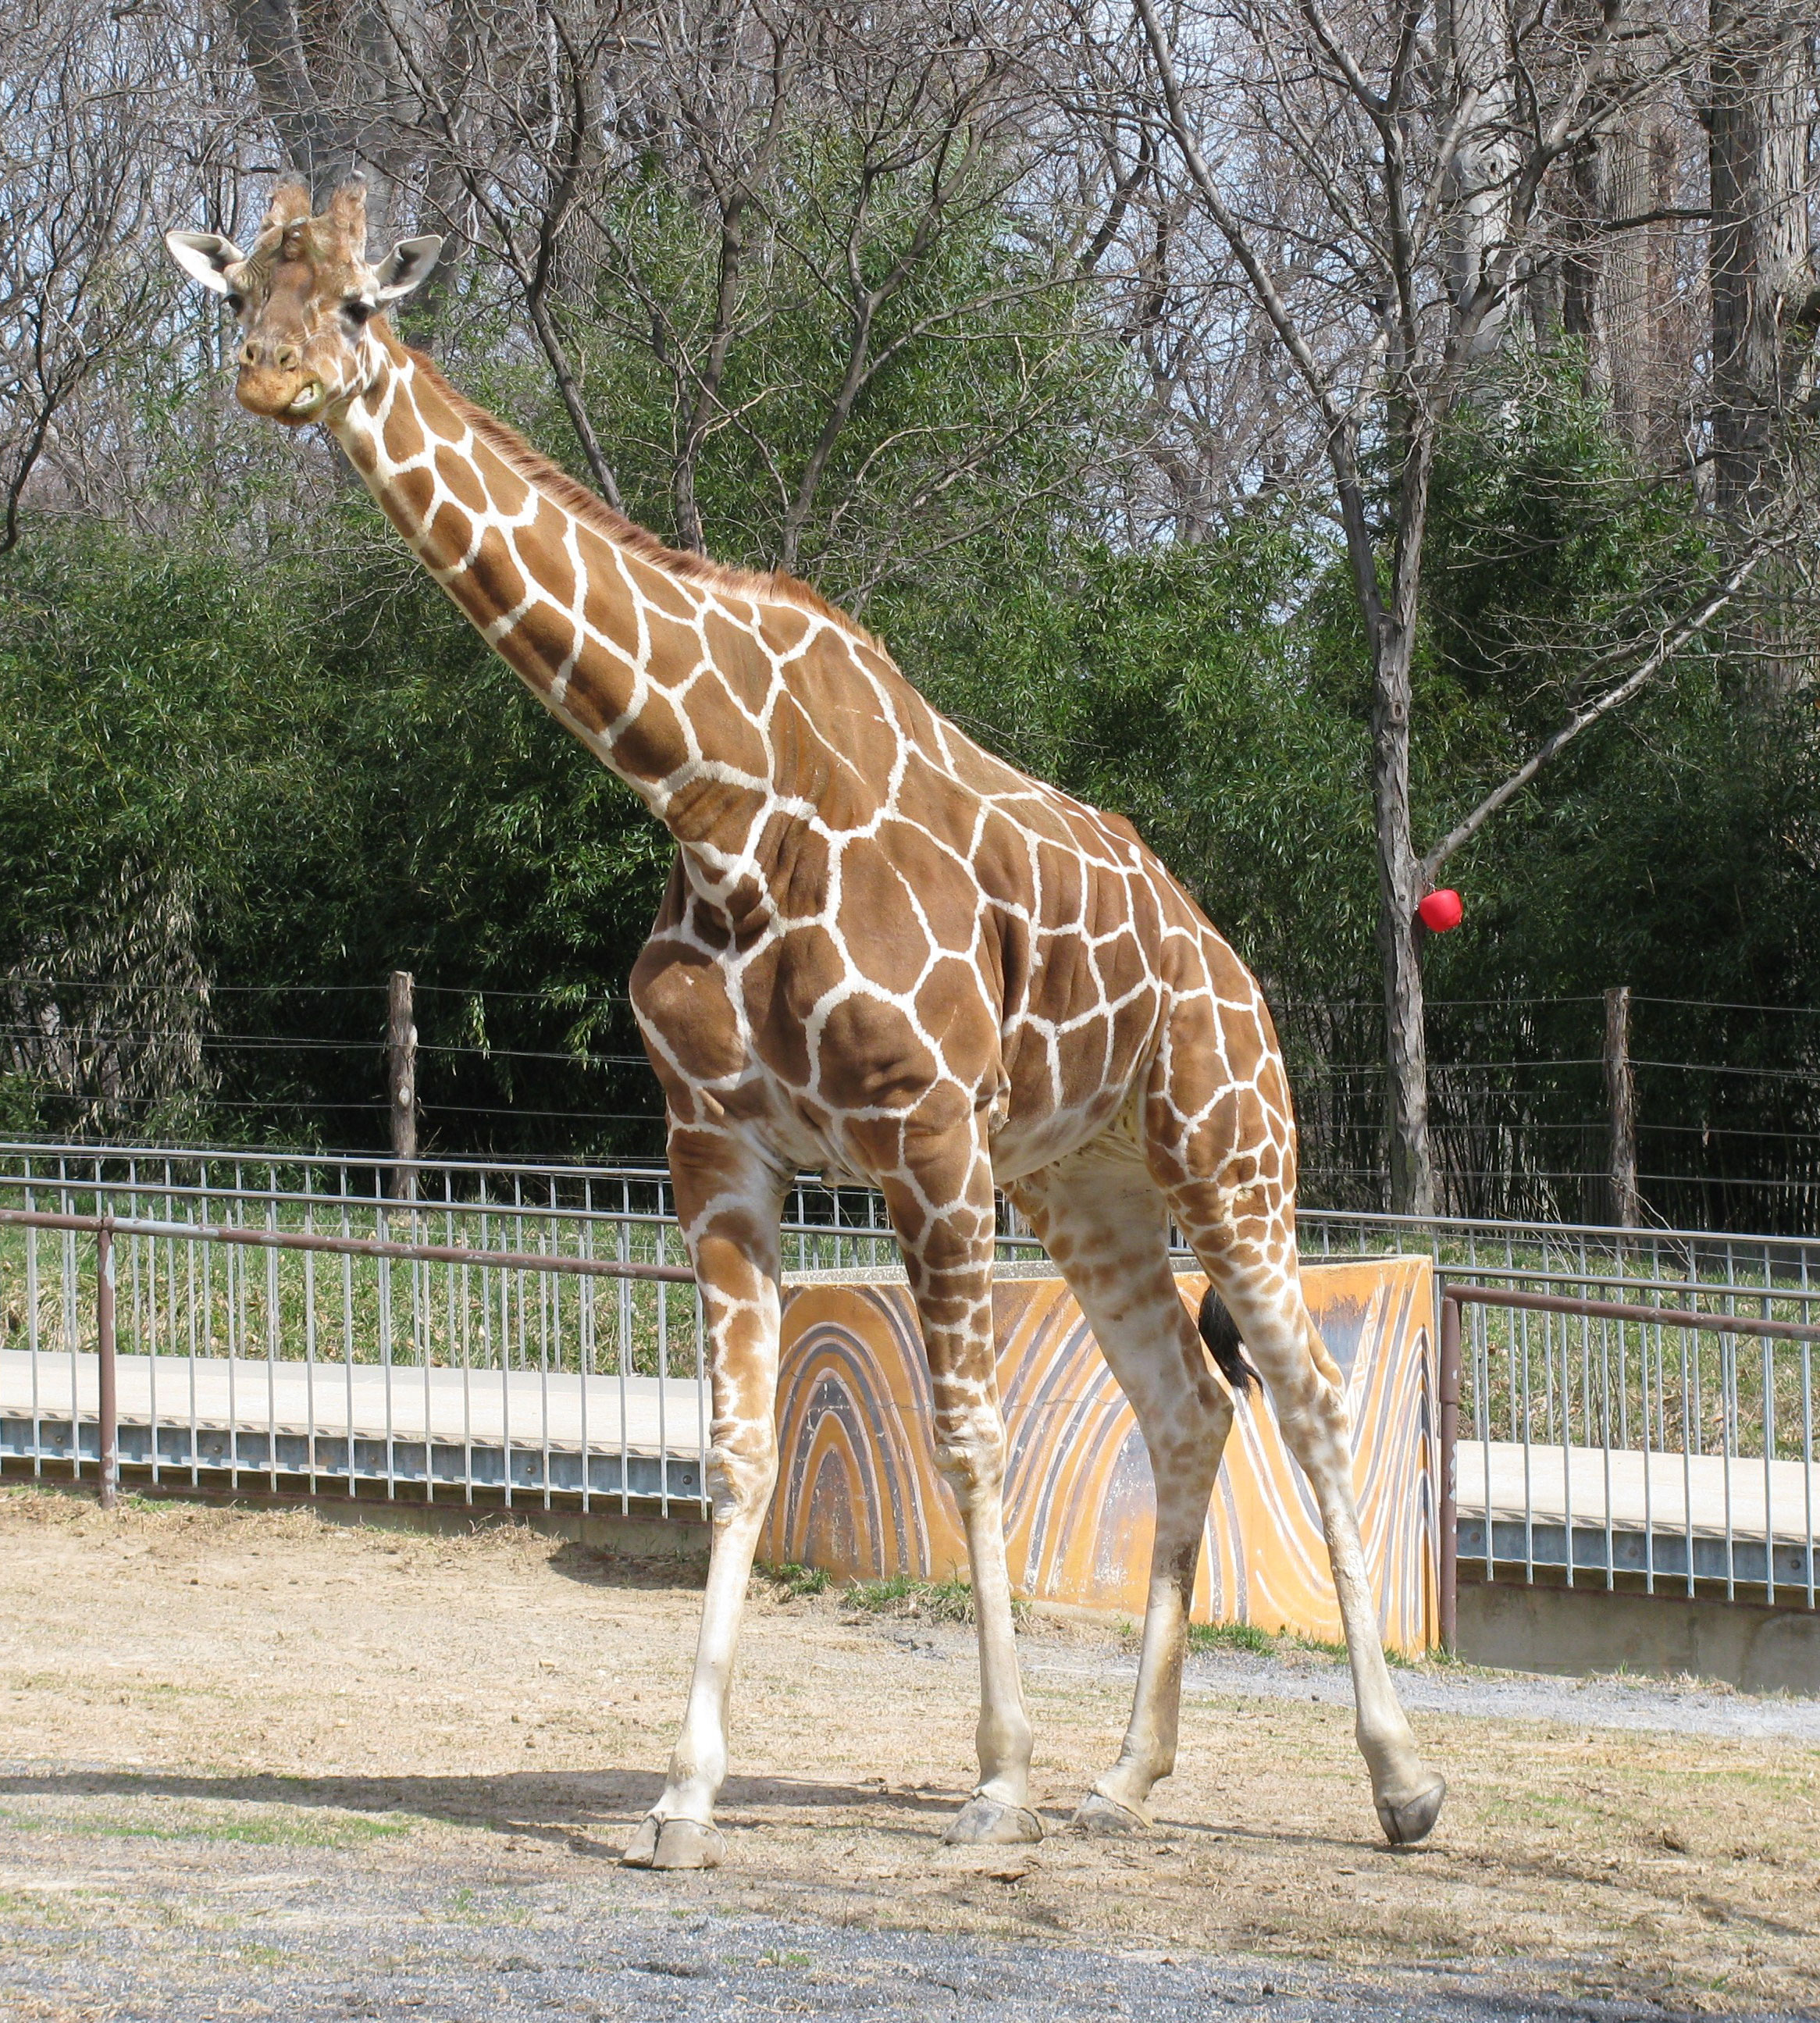 Maryland Zoo Mourning Loss of Giraffe Zoe | The Maryland Zoo in ...